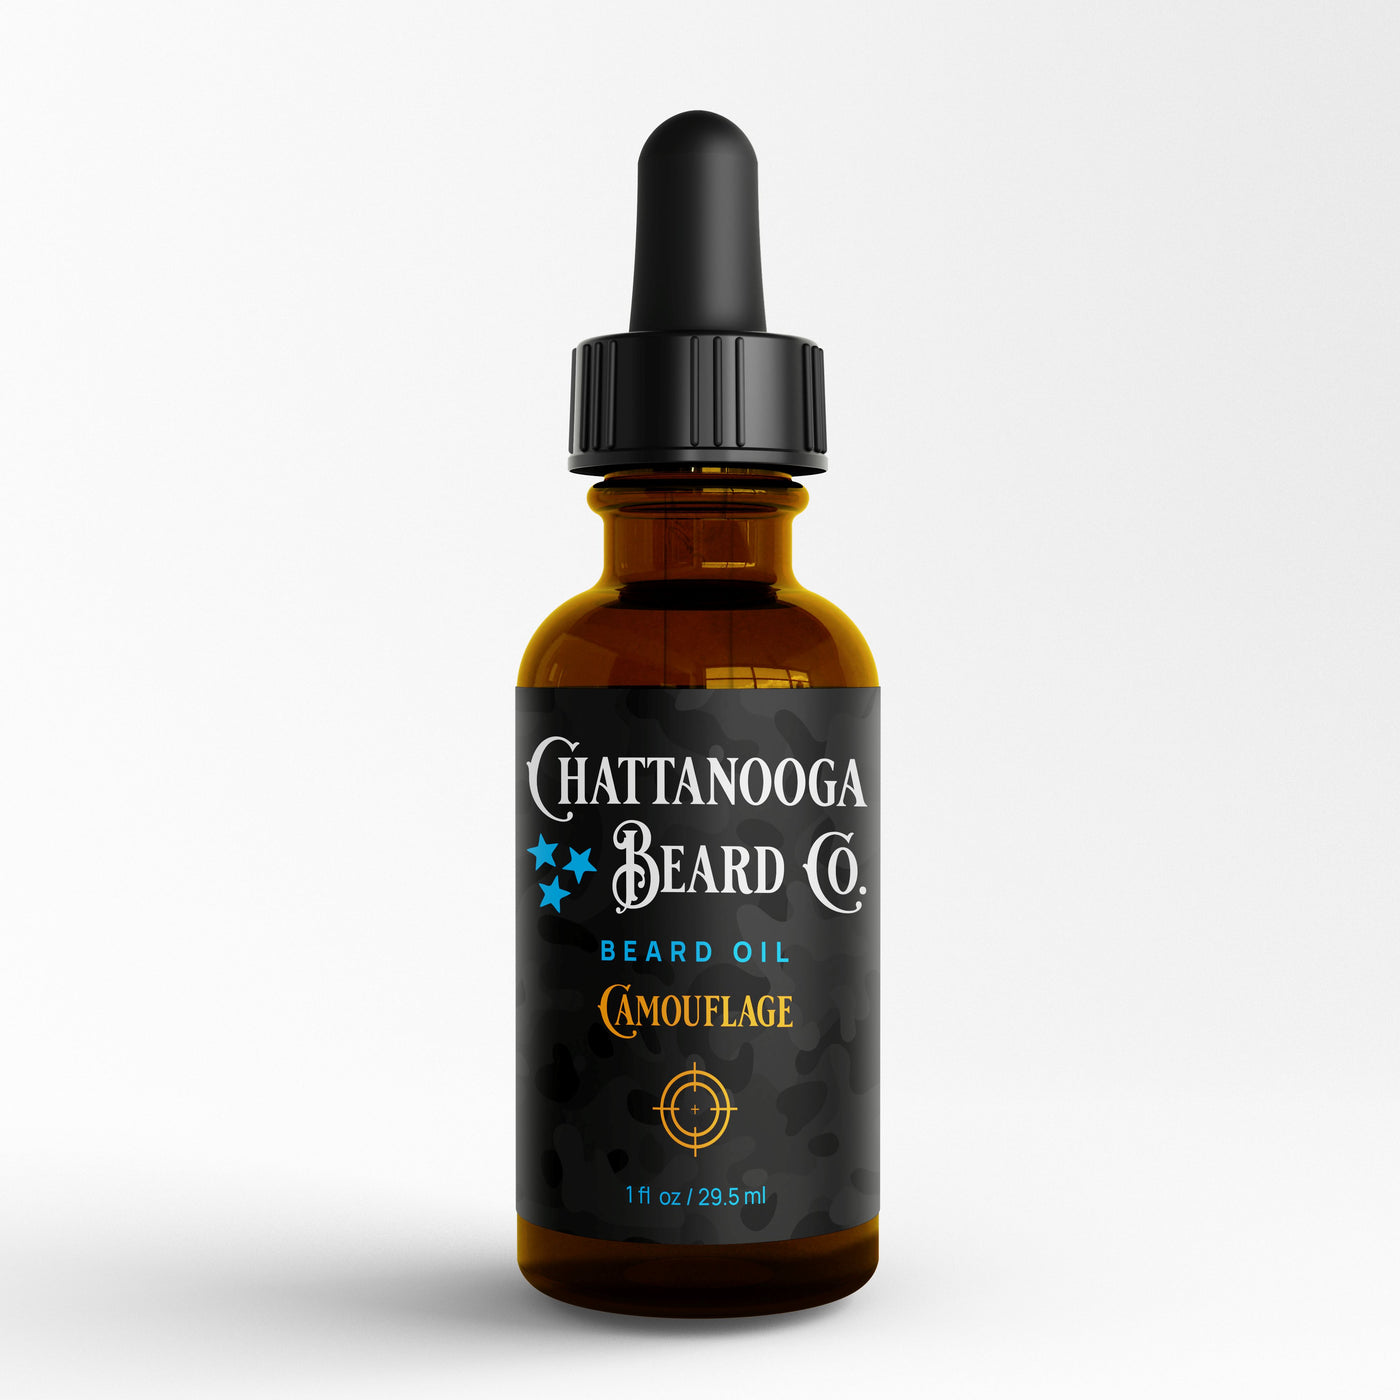 Chattanooga Beard Co. - Beard Oil Oil Chattanooga Beard Co. Camouflage 